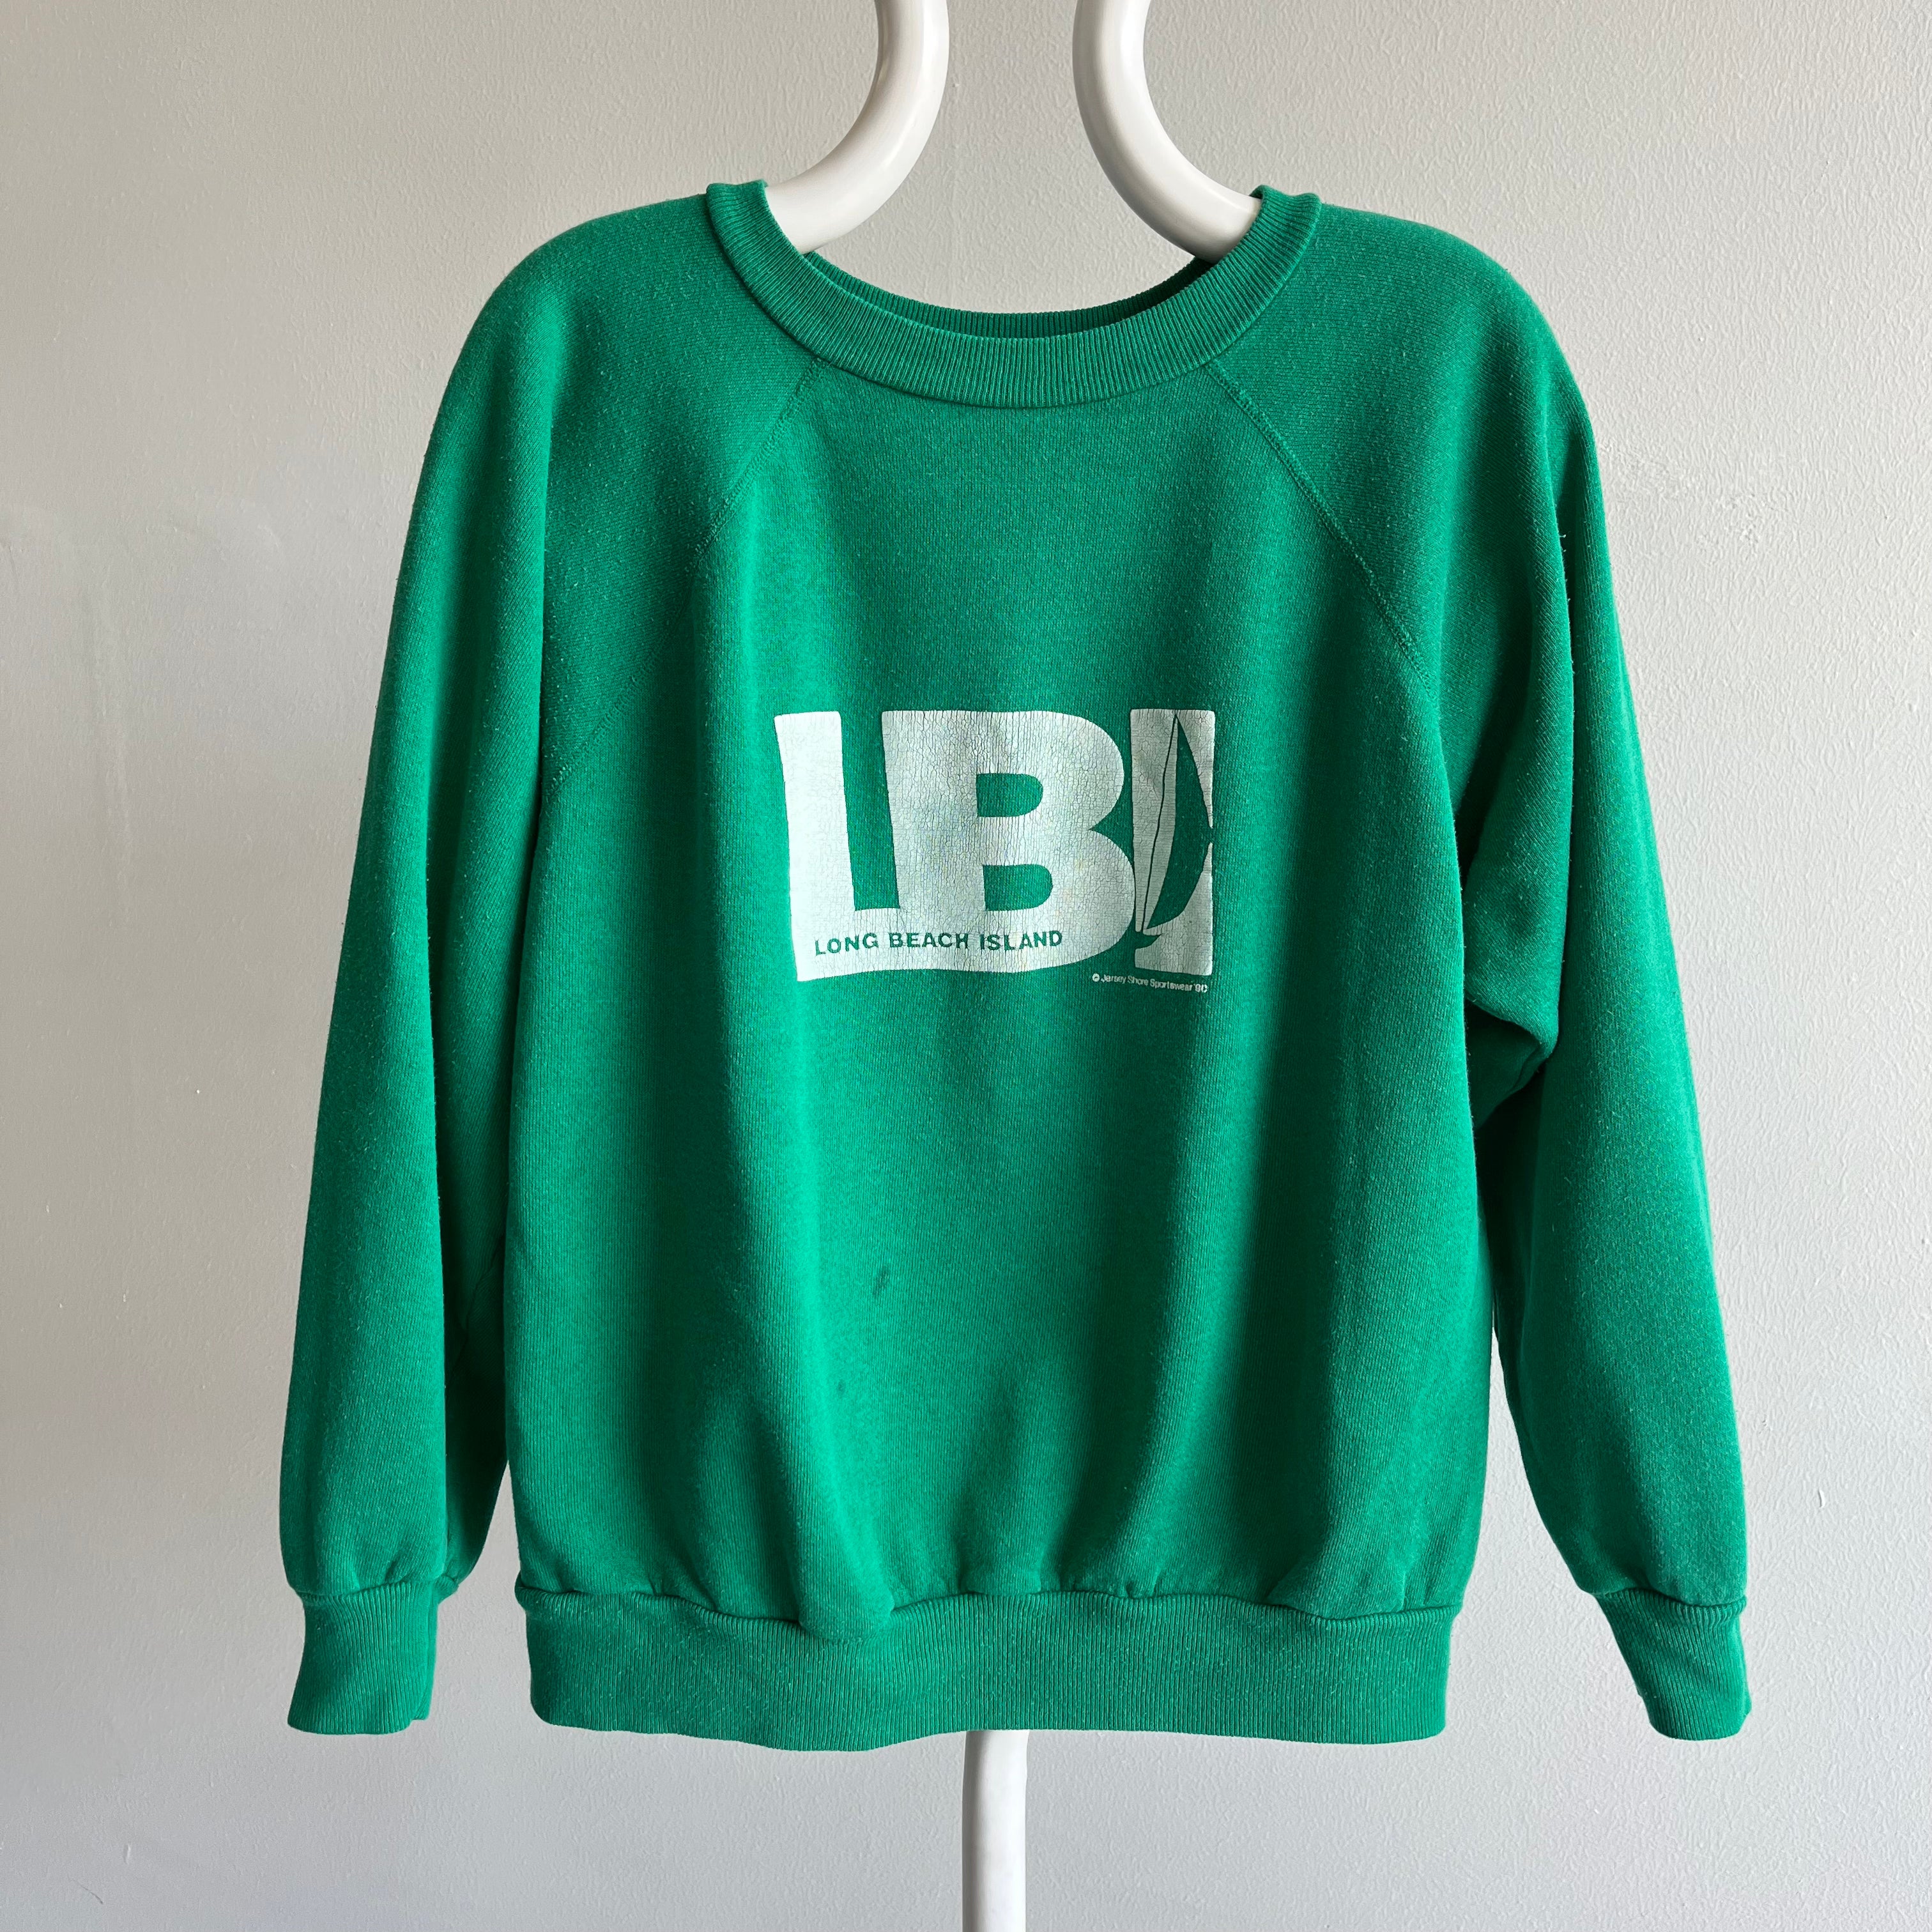 1990 Long Beach Island Sweatshirt